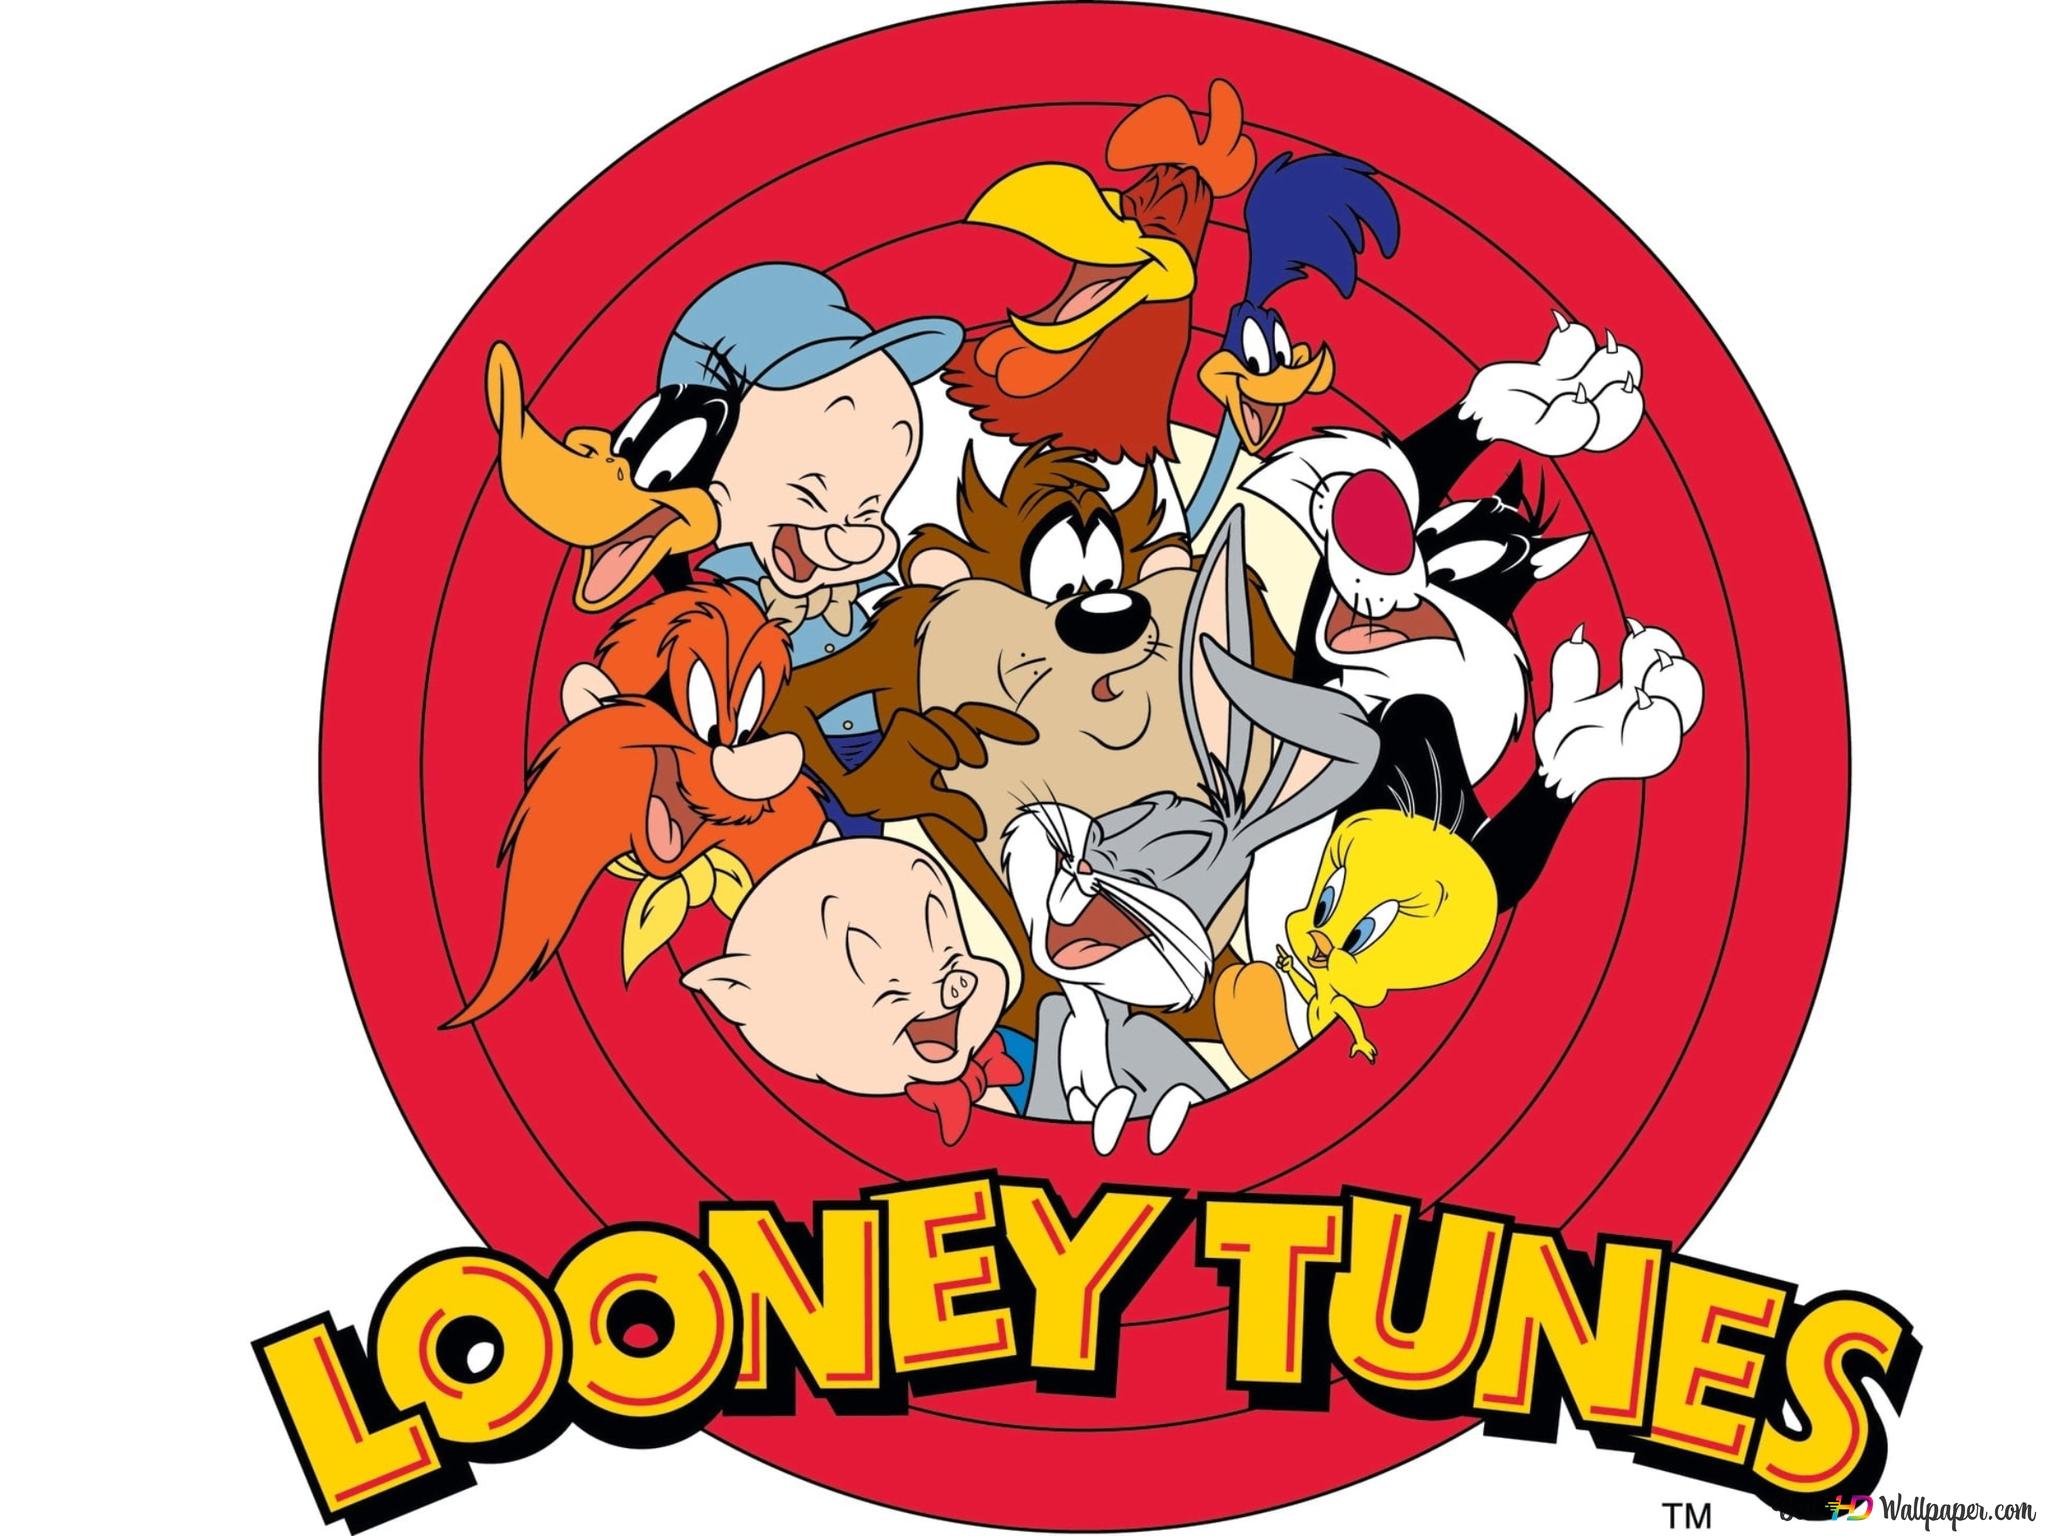 Looney tunes porky pig unmanaged sam daffy duck k wallpaper download